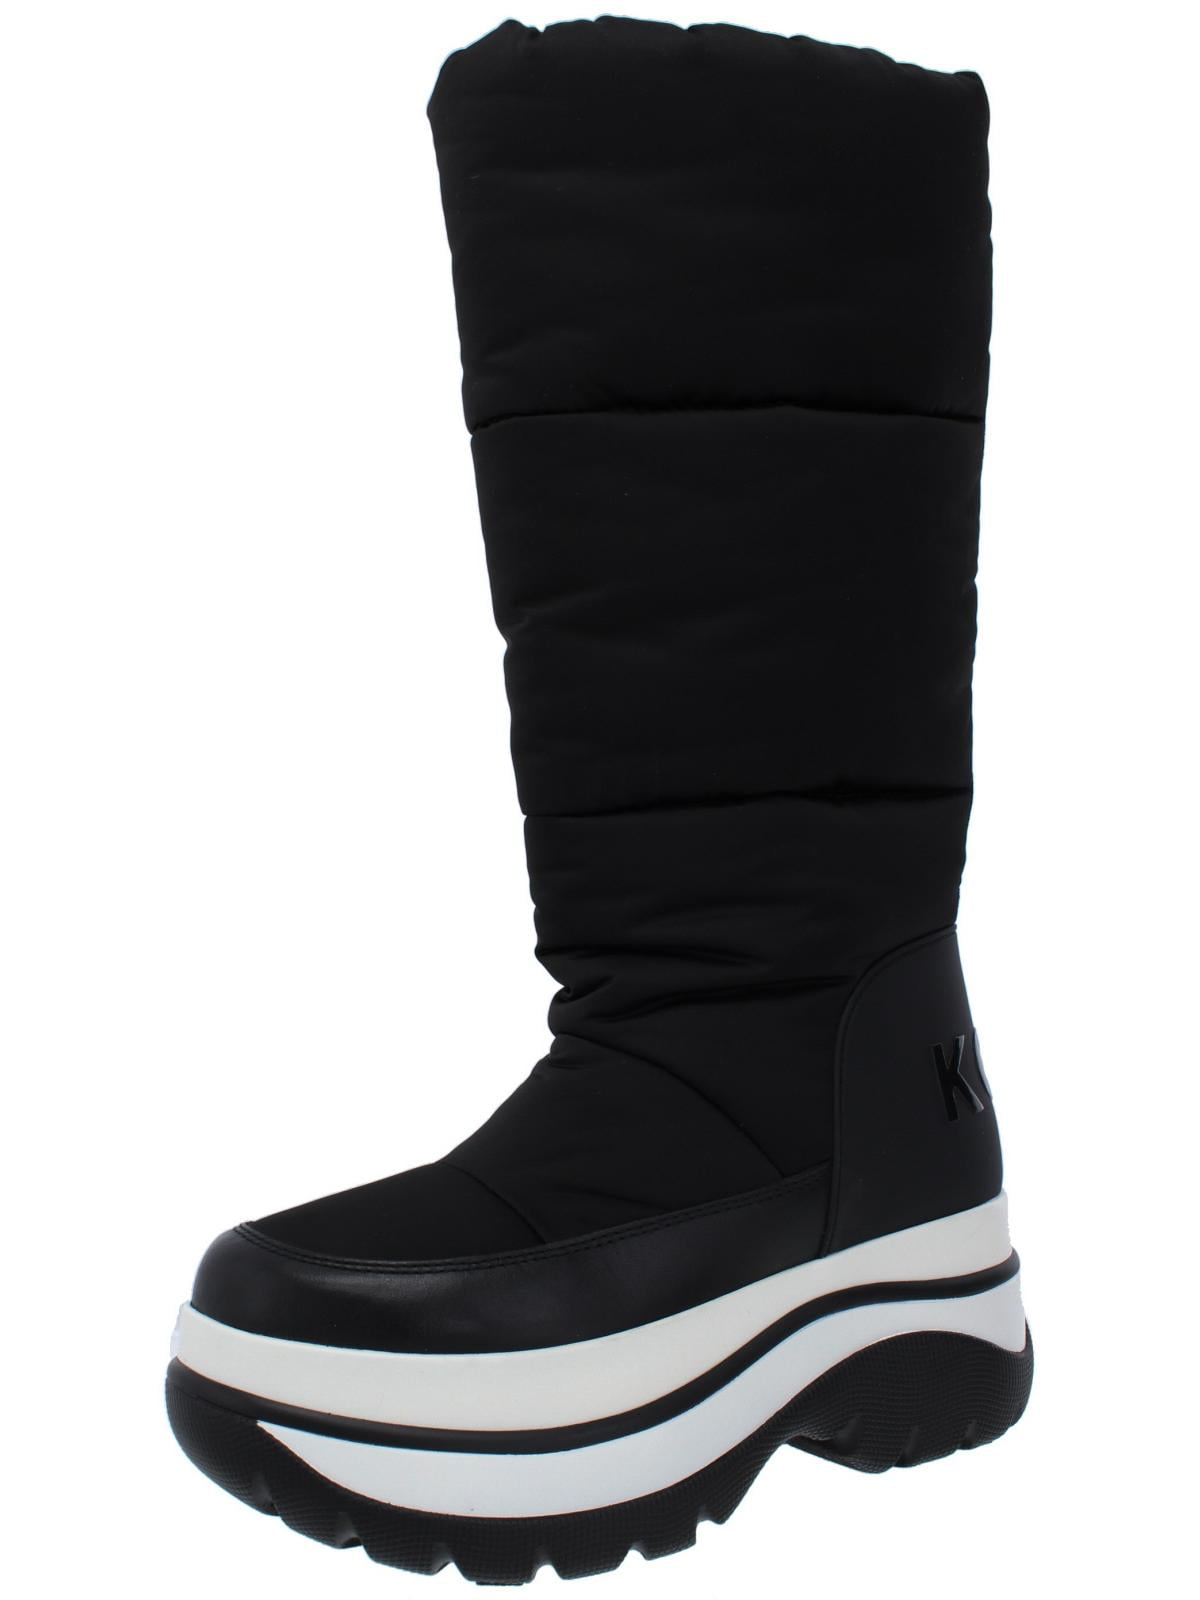 michael kors women's snow boots